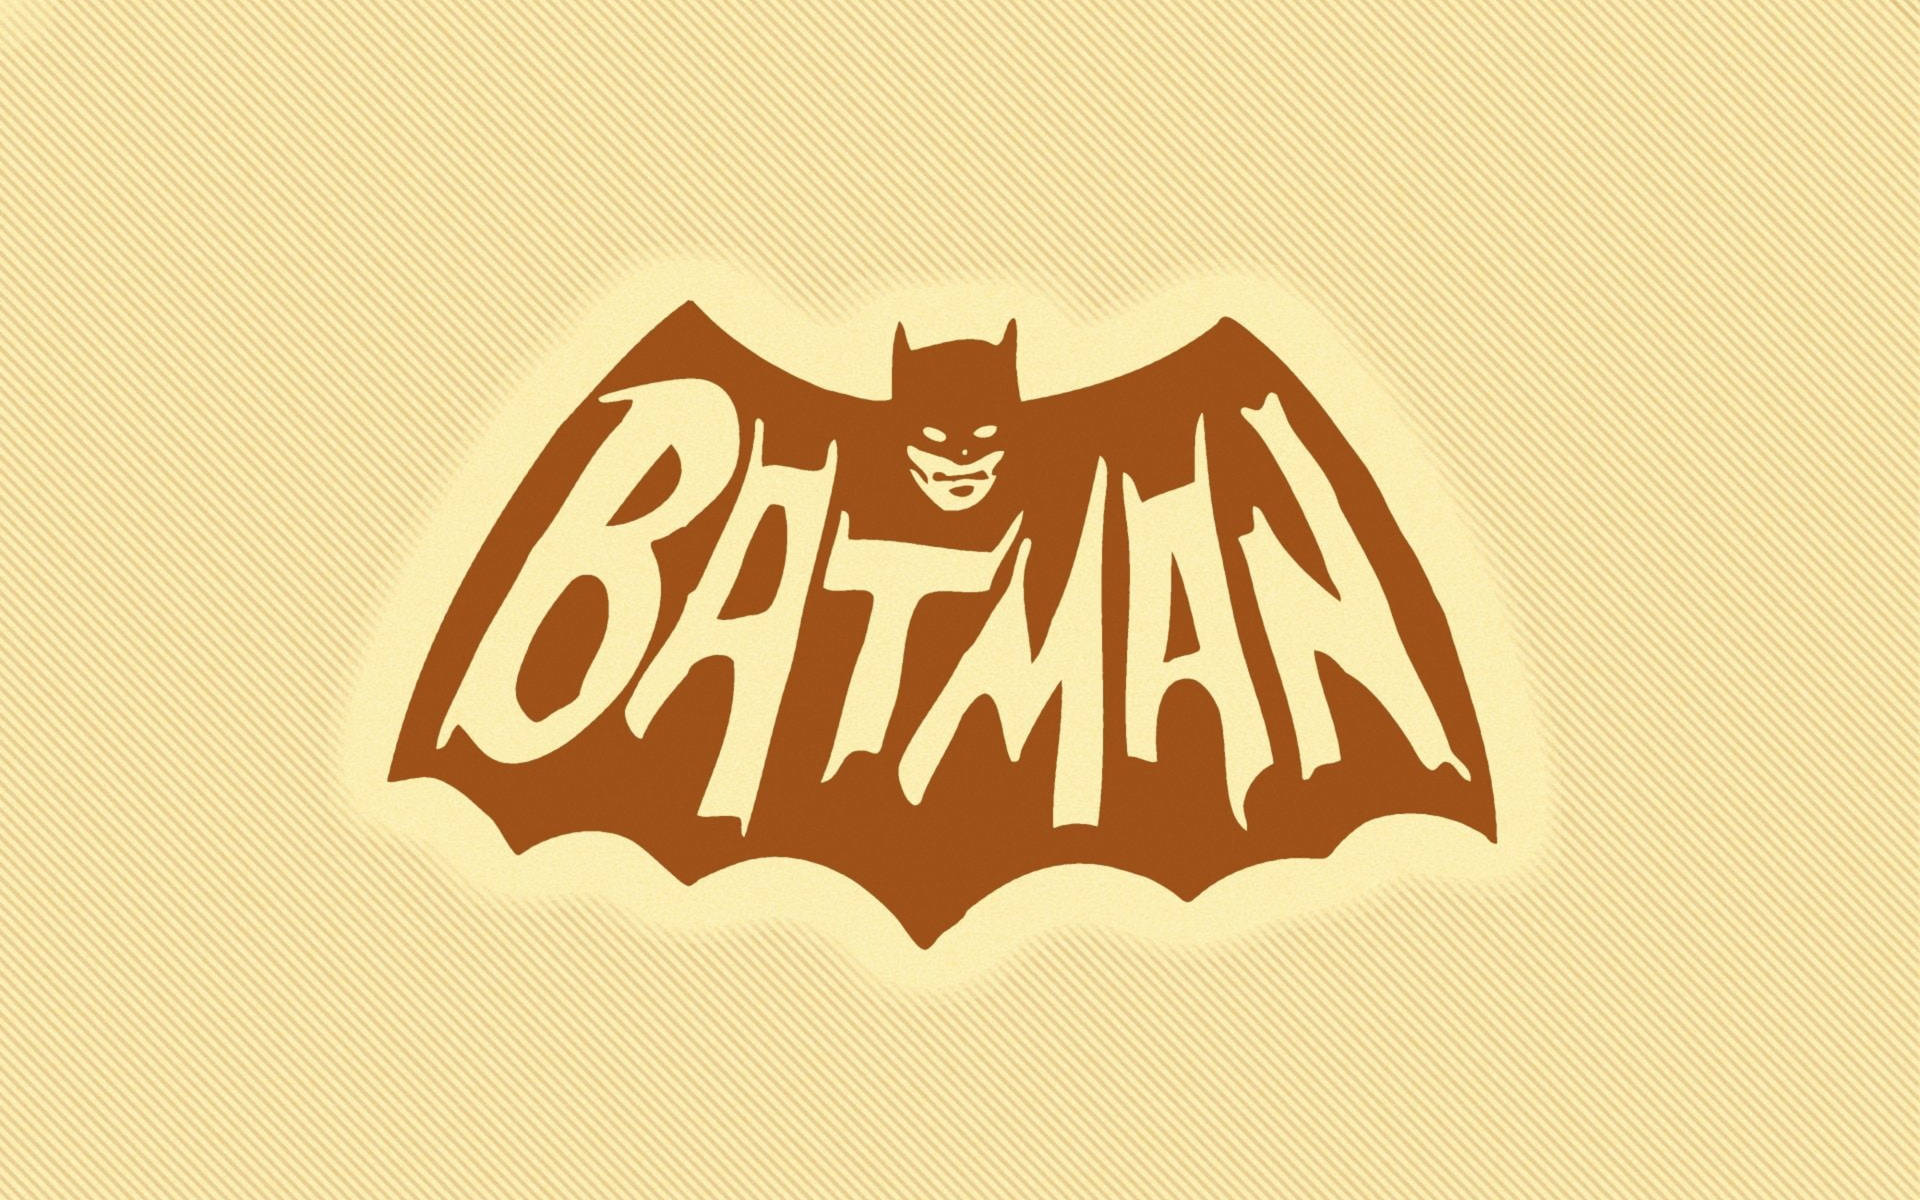 Digital Art Batman Logo Background